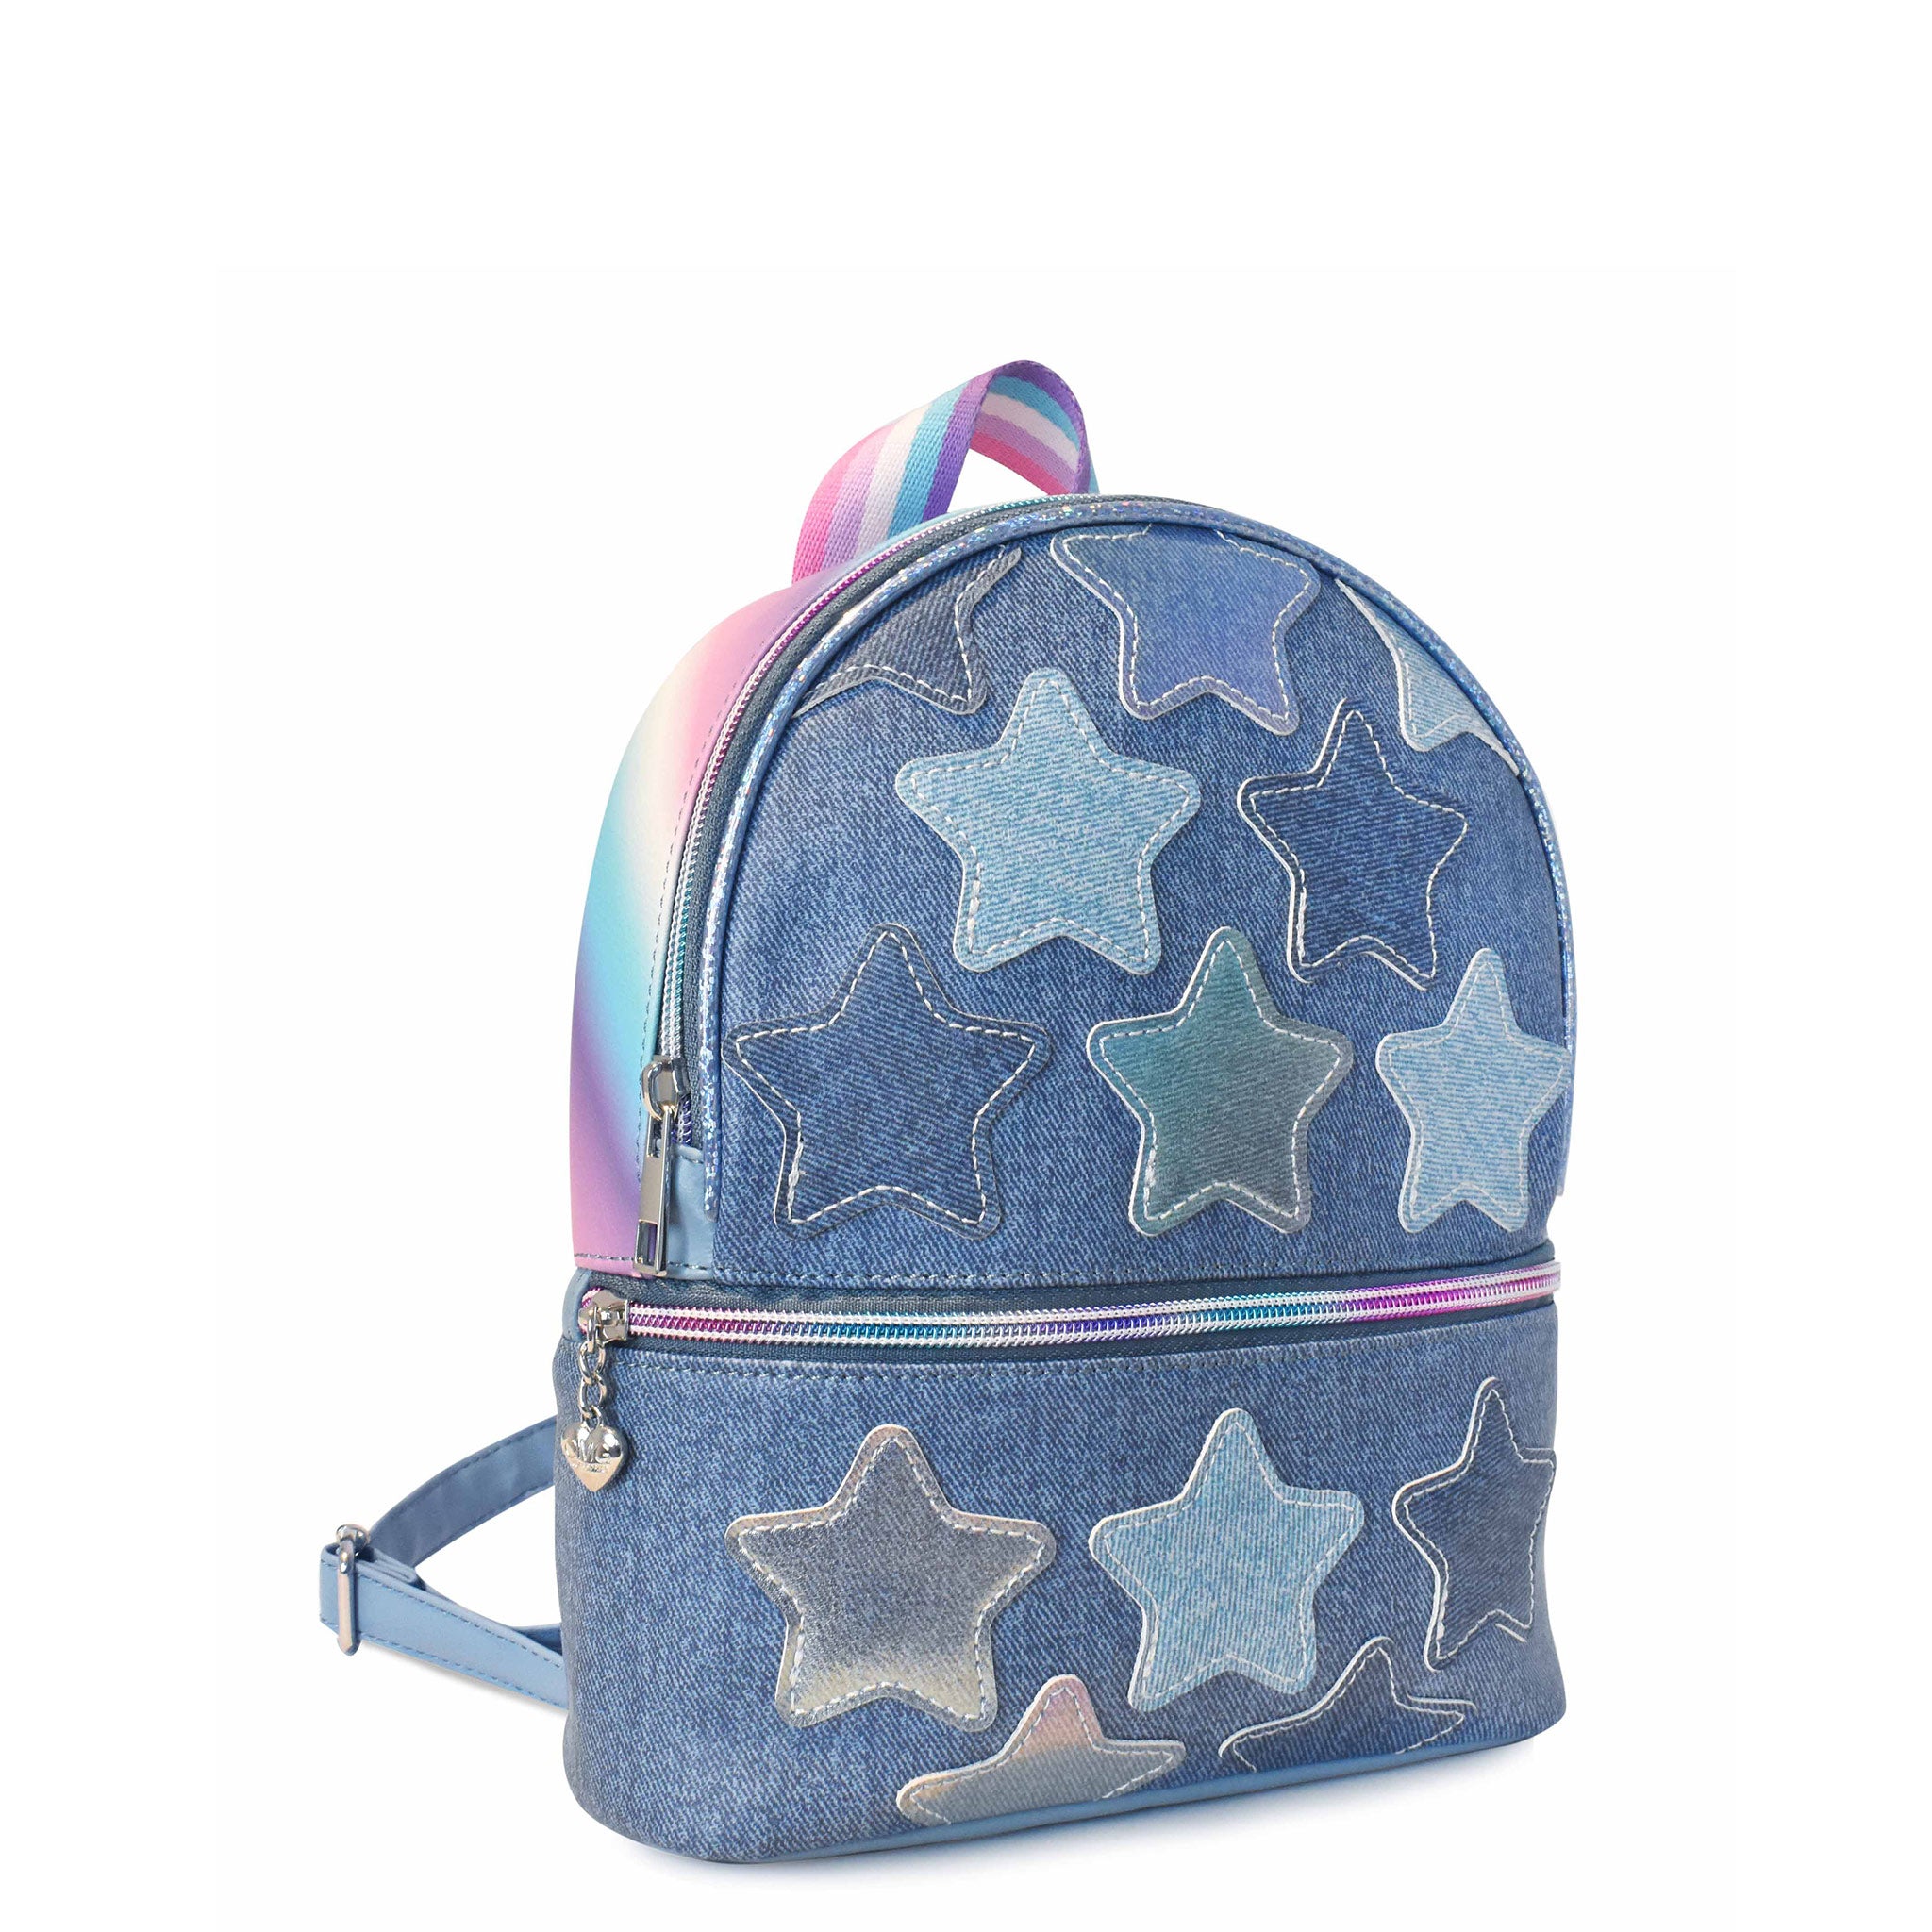 Side view of a denim mini backpack covered in metallic & denim star patch appliqués